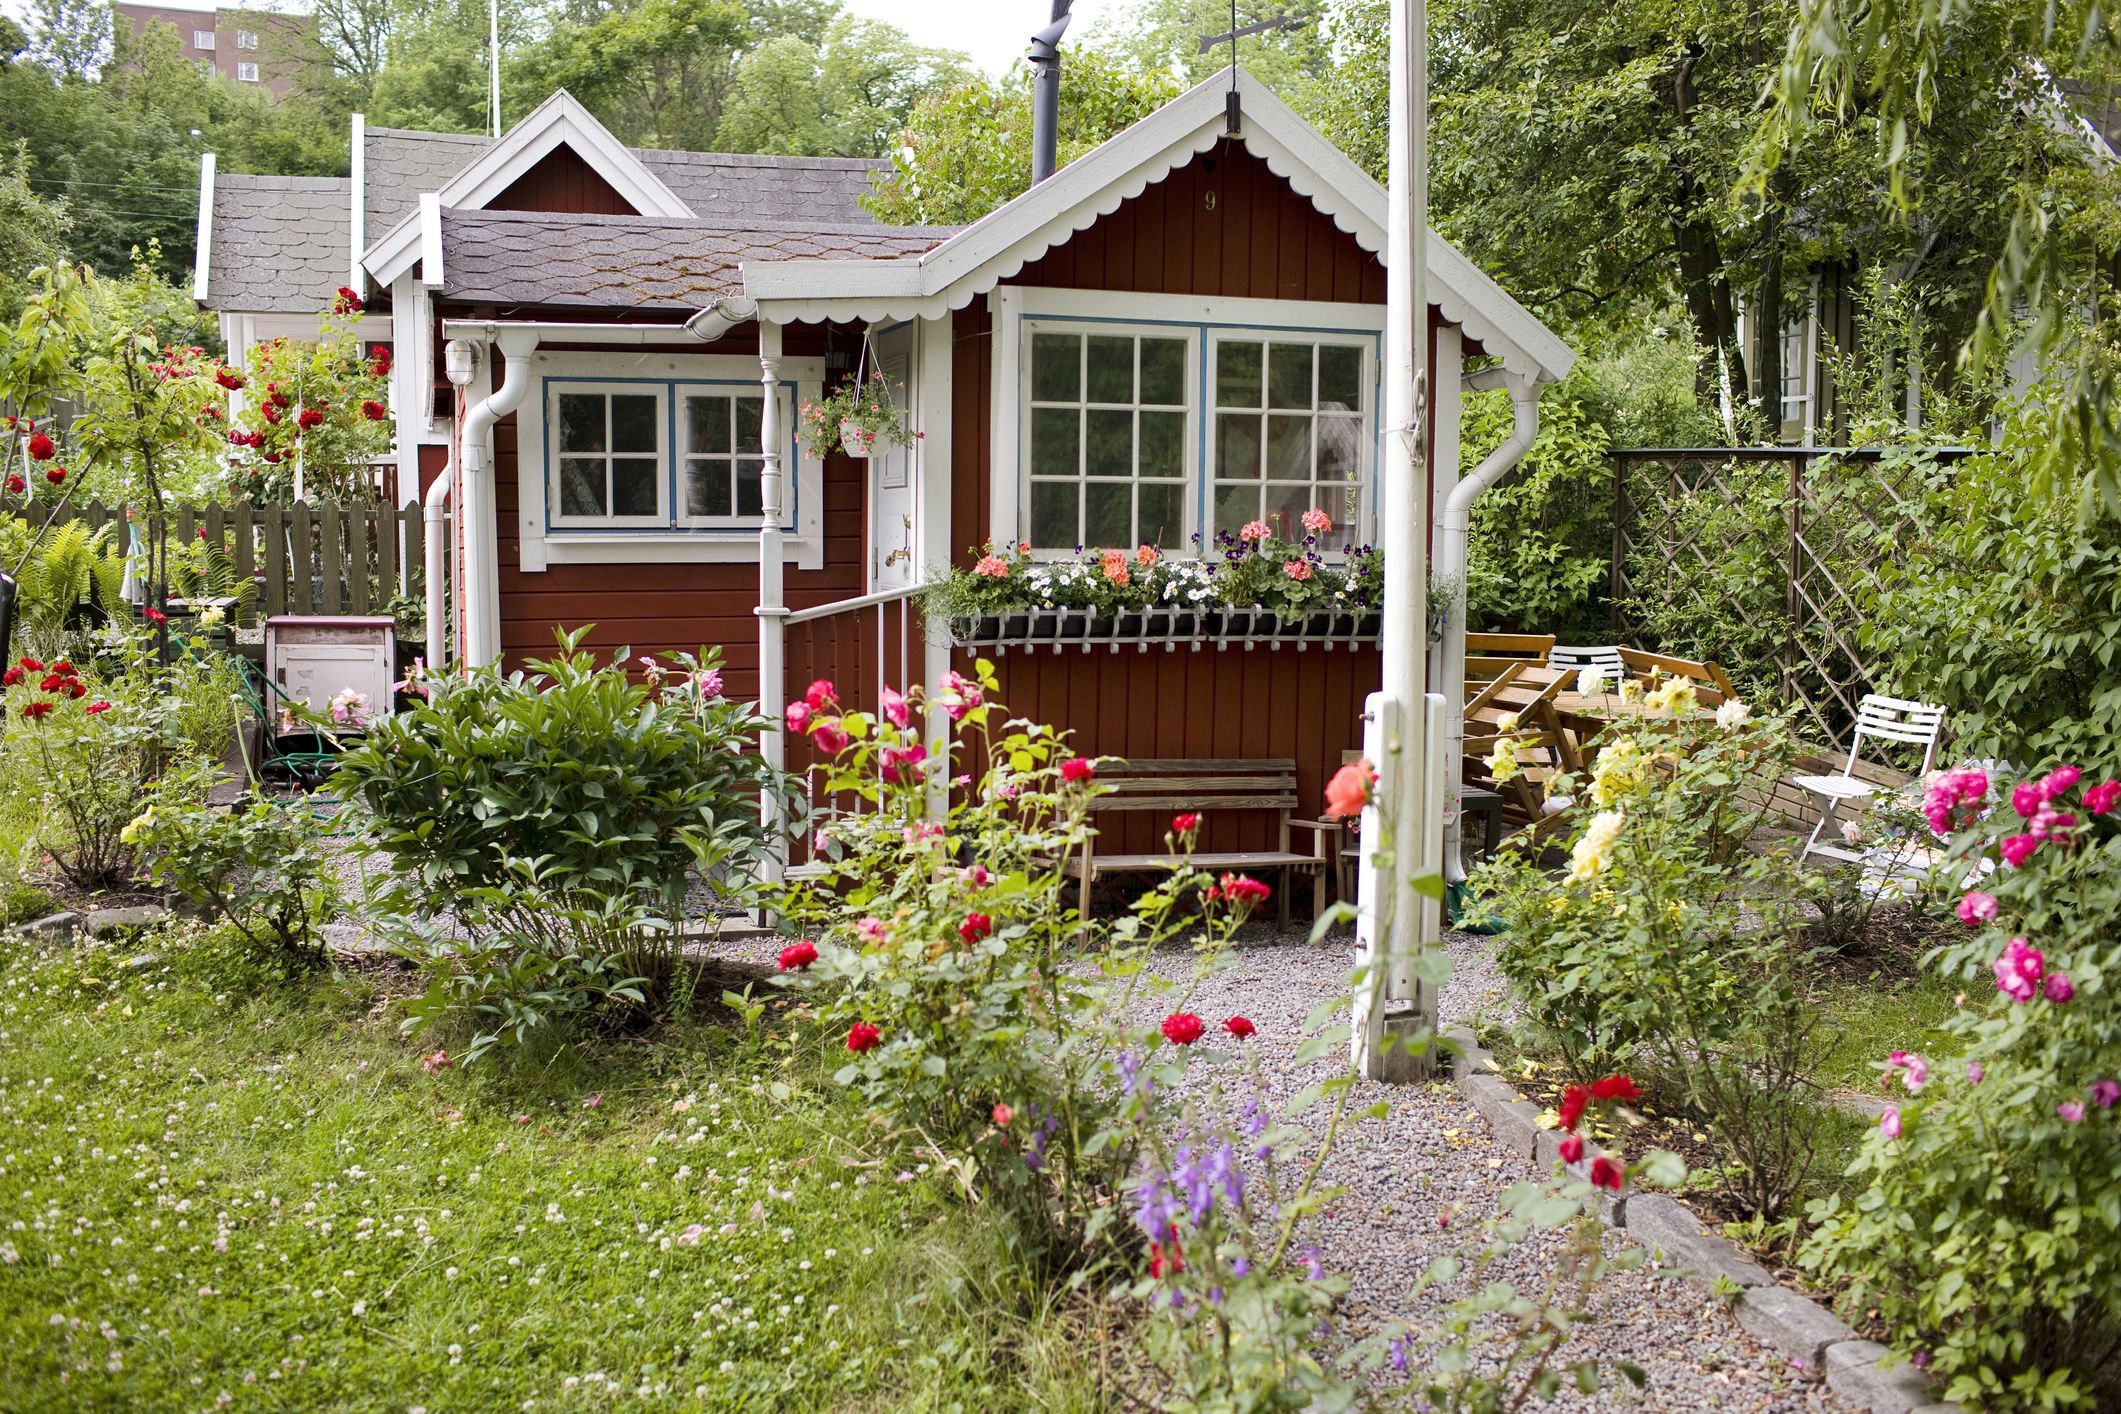 28 Small Backyard Ideas - Beautiful Designs For Tiny Yards